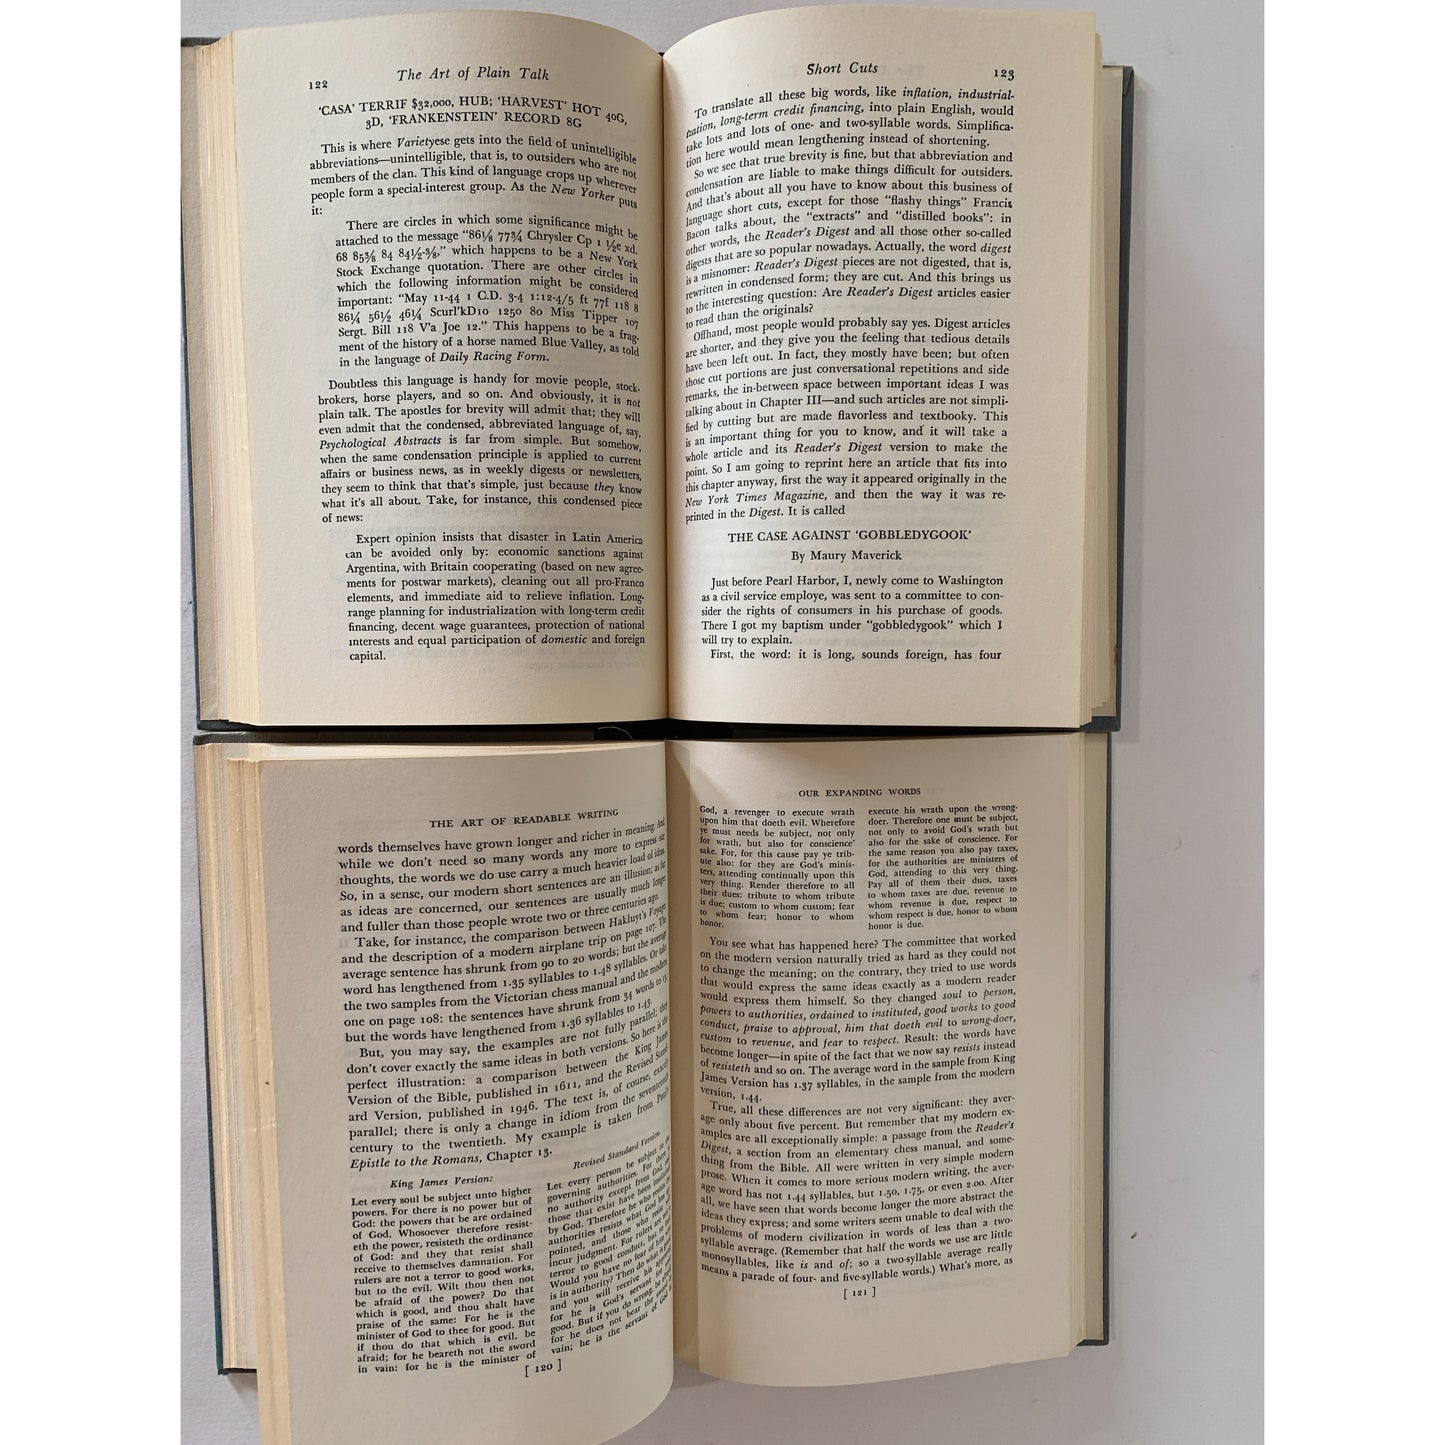 The Art of Plain Talk, The Art of Readable Writing, Mid Century Book Set